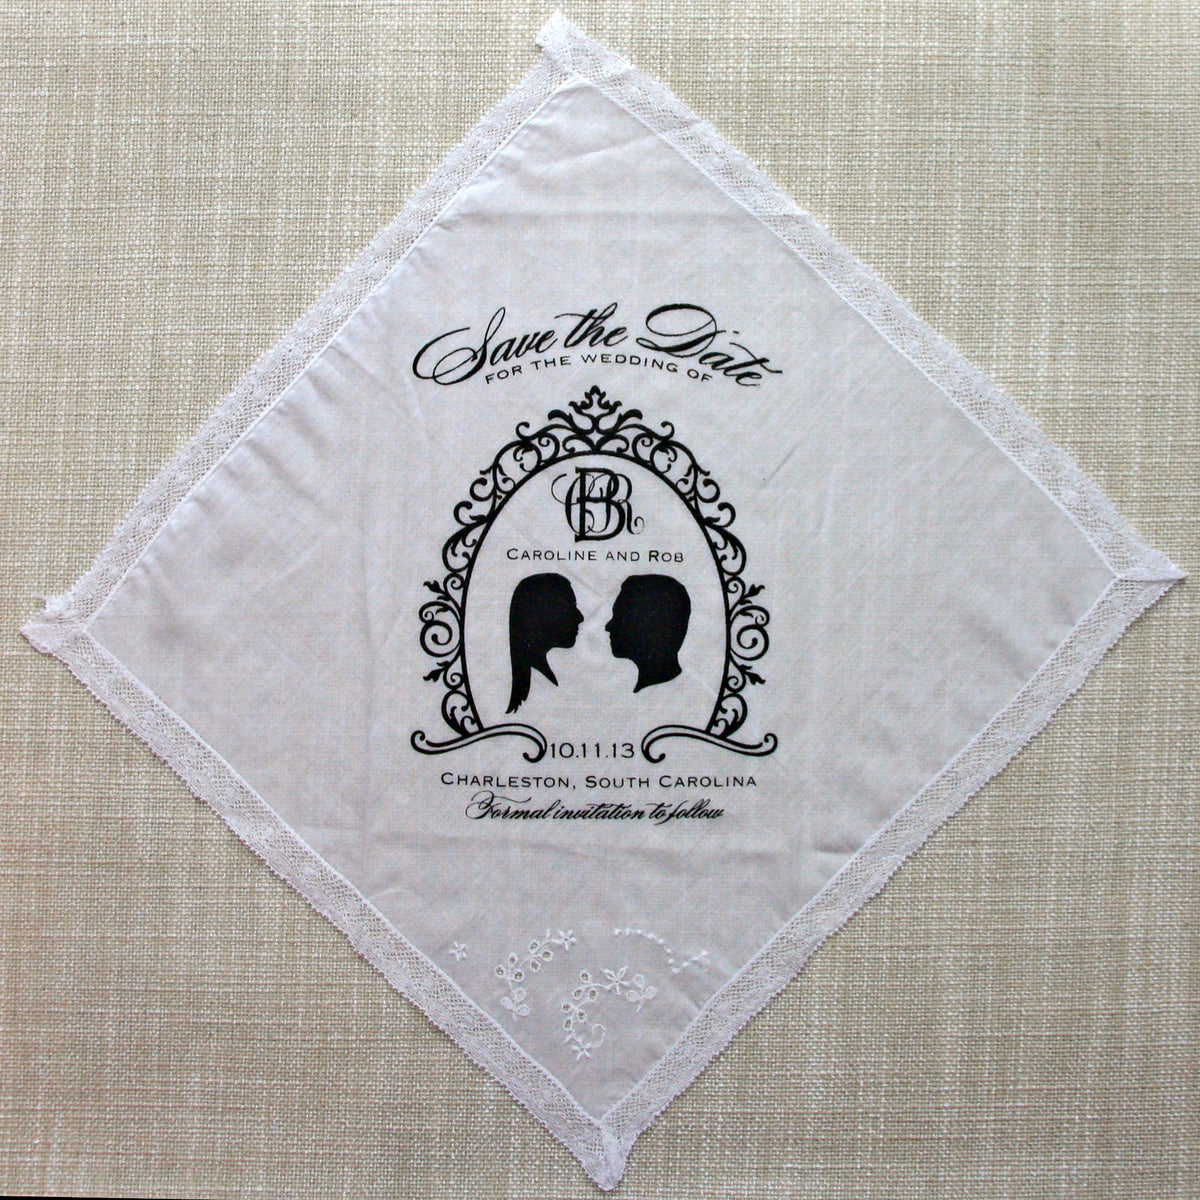 Vintage screen printed handkerchief save the date